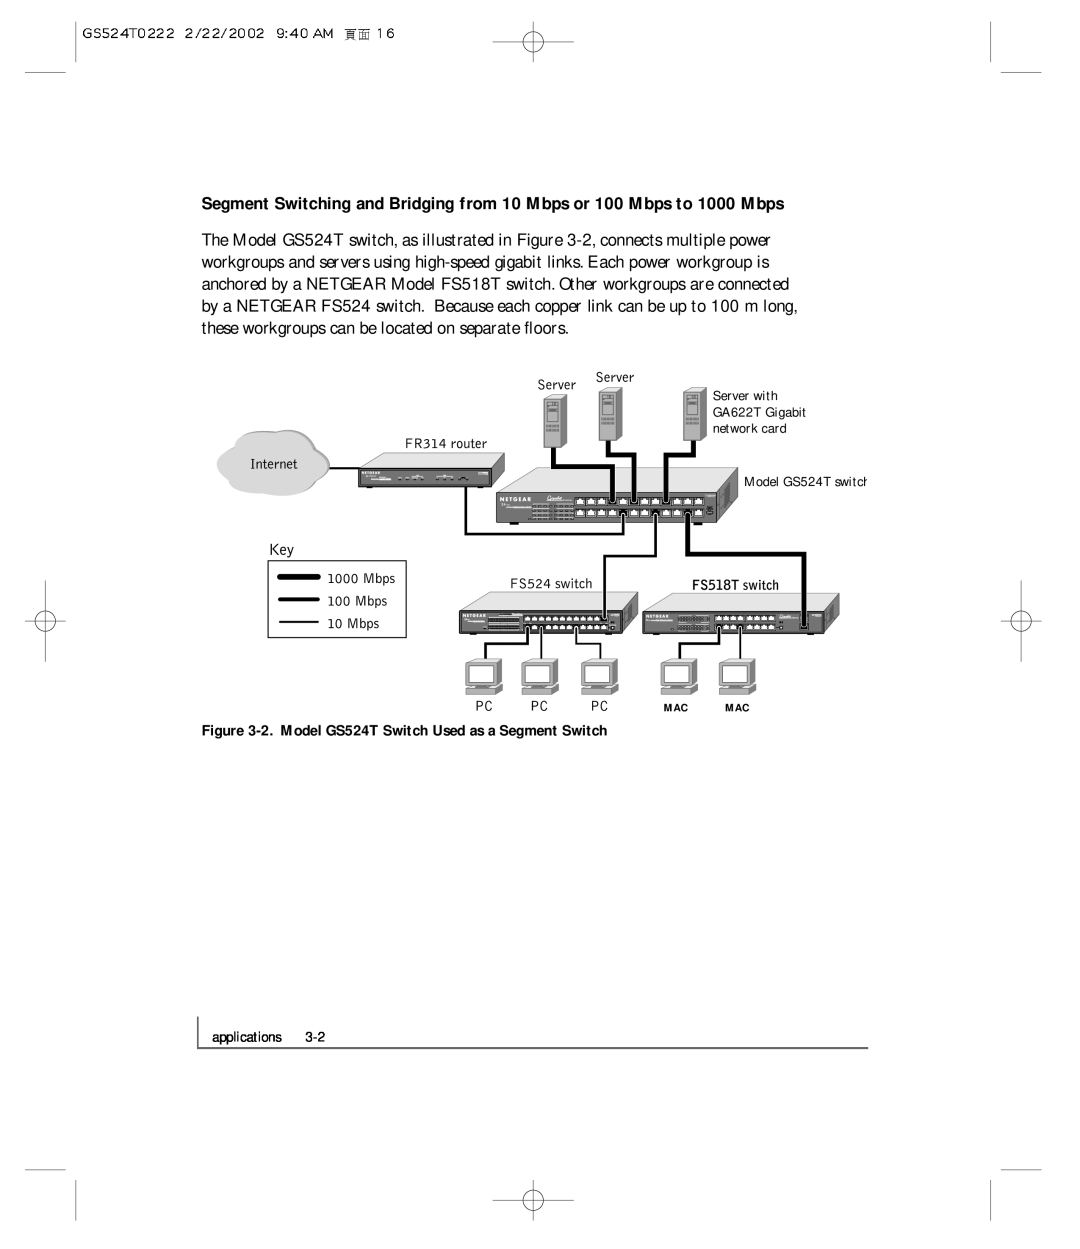 NETGEAR manual Server with GA622T Gigabit network card, Model GS524T switch, Mac Mac 